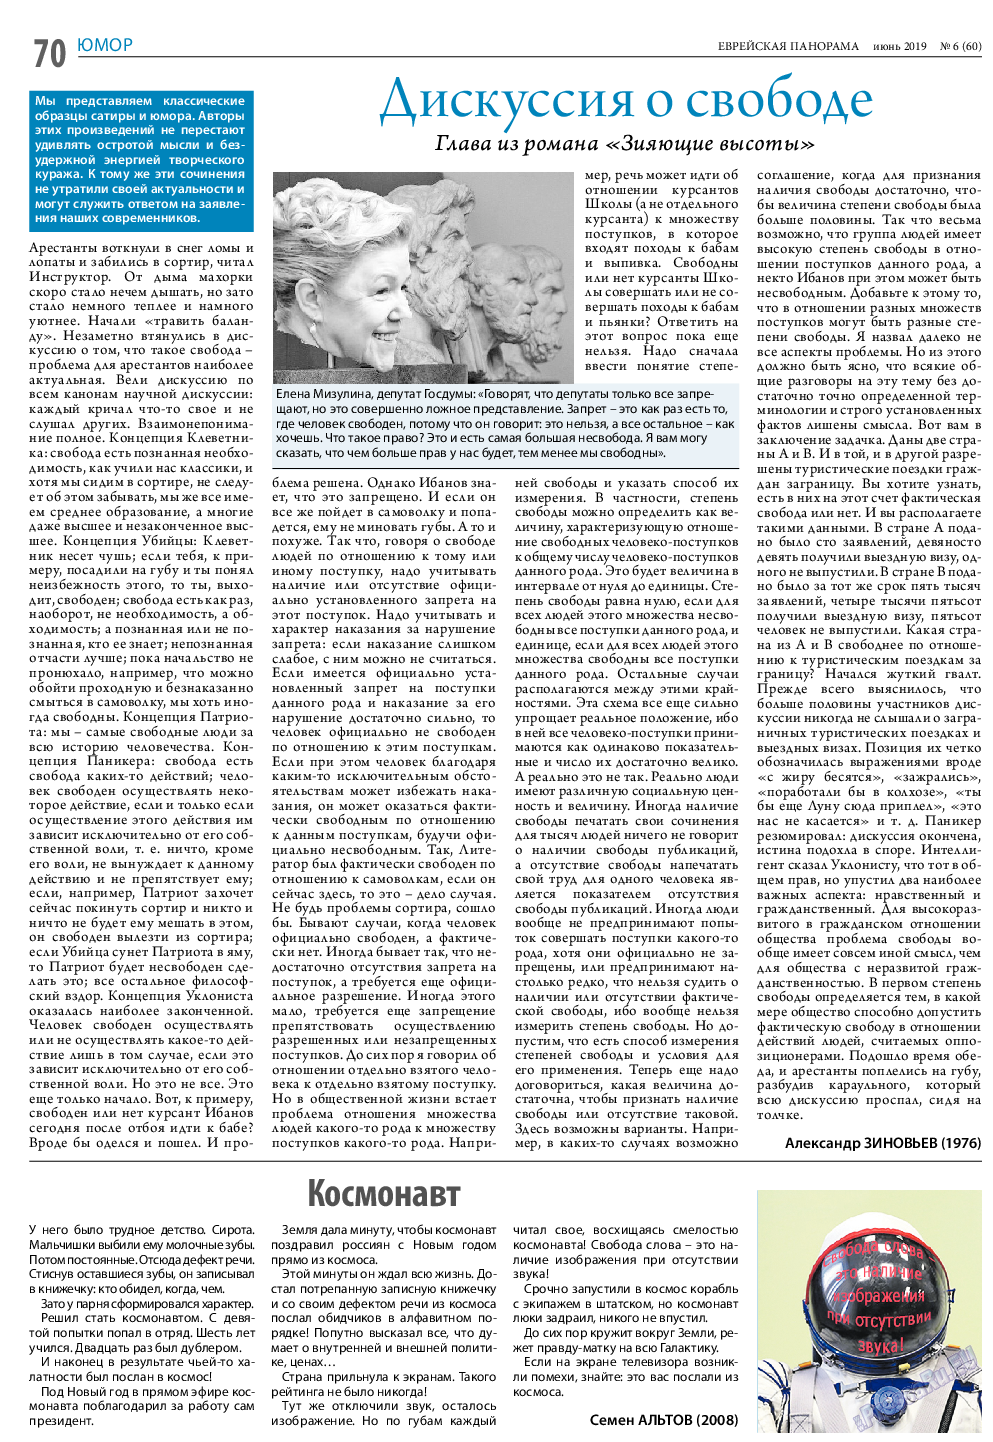 Еврейская панорама, газета. 2019 №6 стр.70